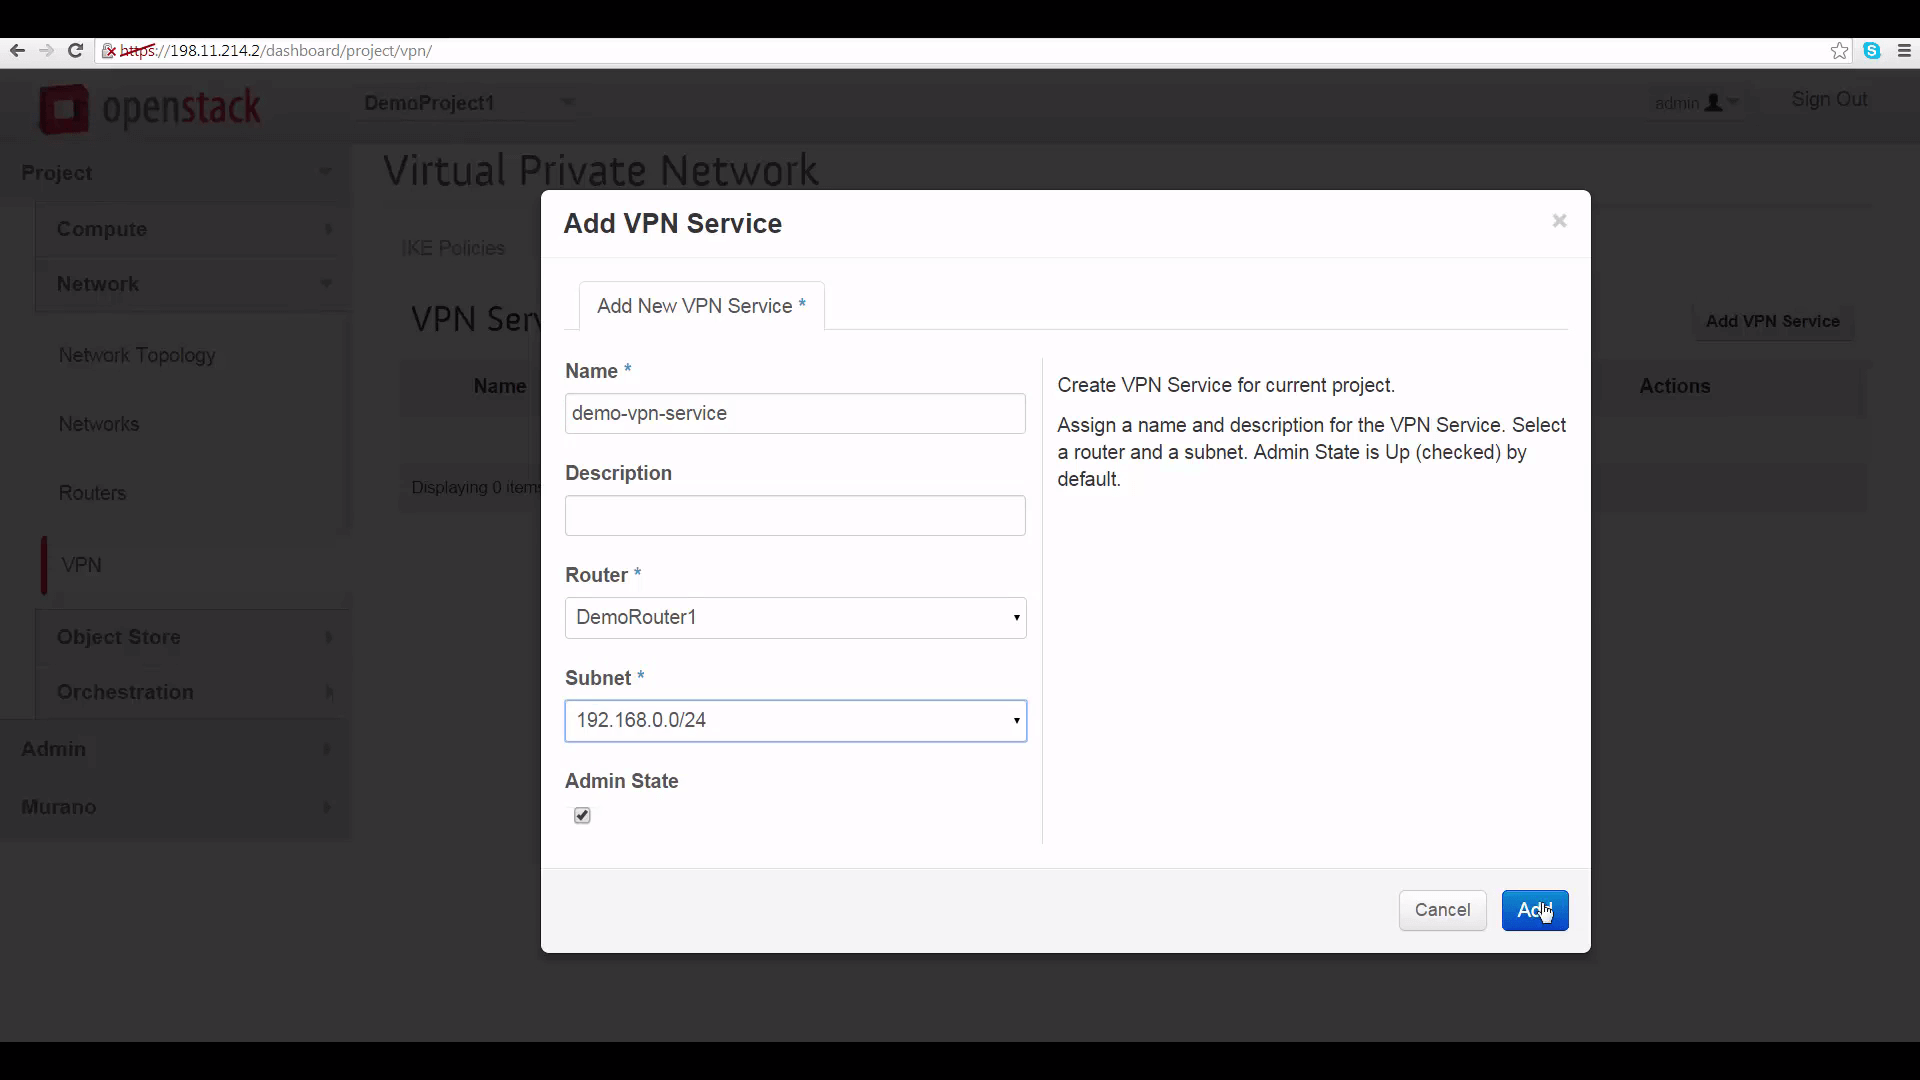 screenshot of Add VPN Service window in Mirantis OpenStack Express dashboard